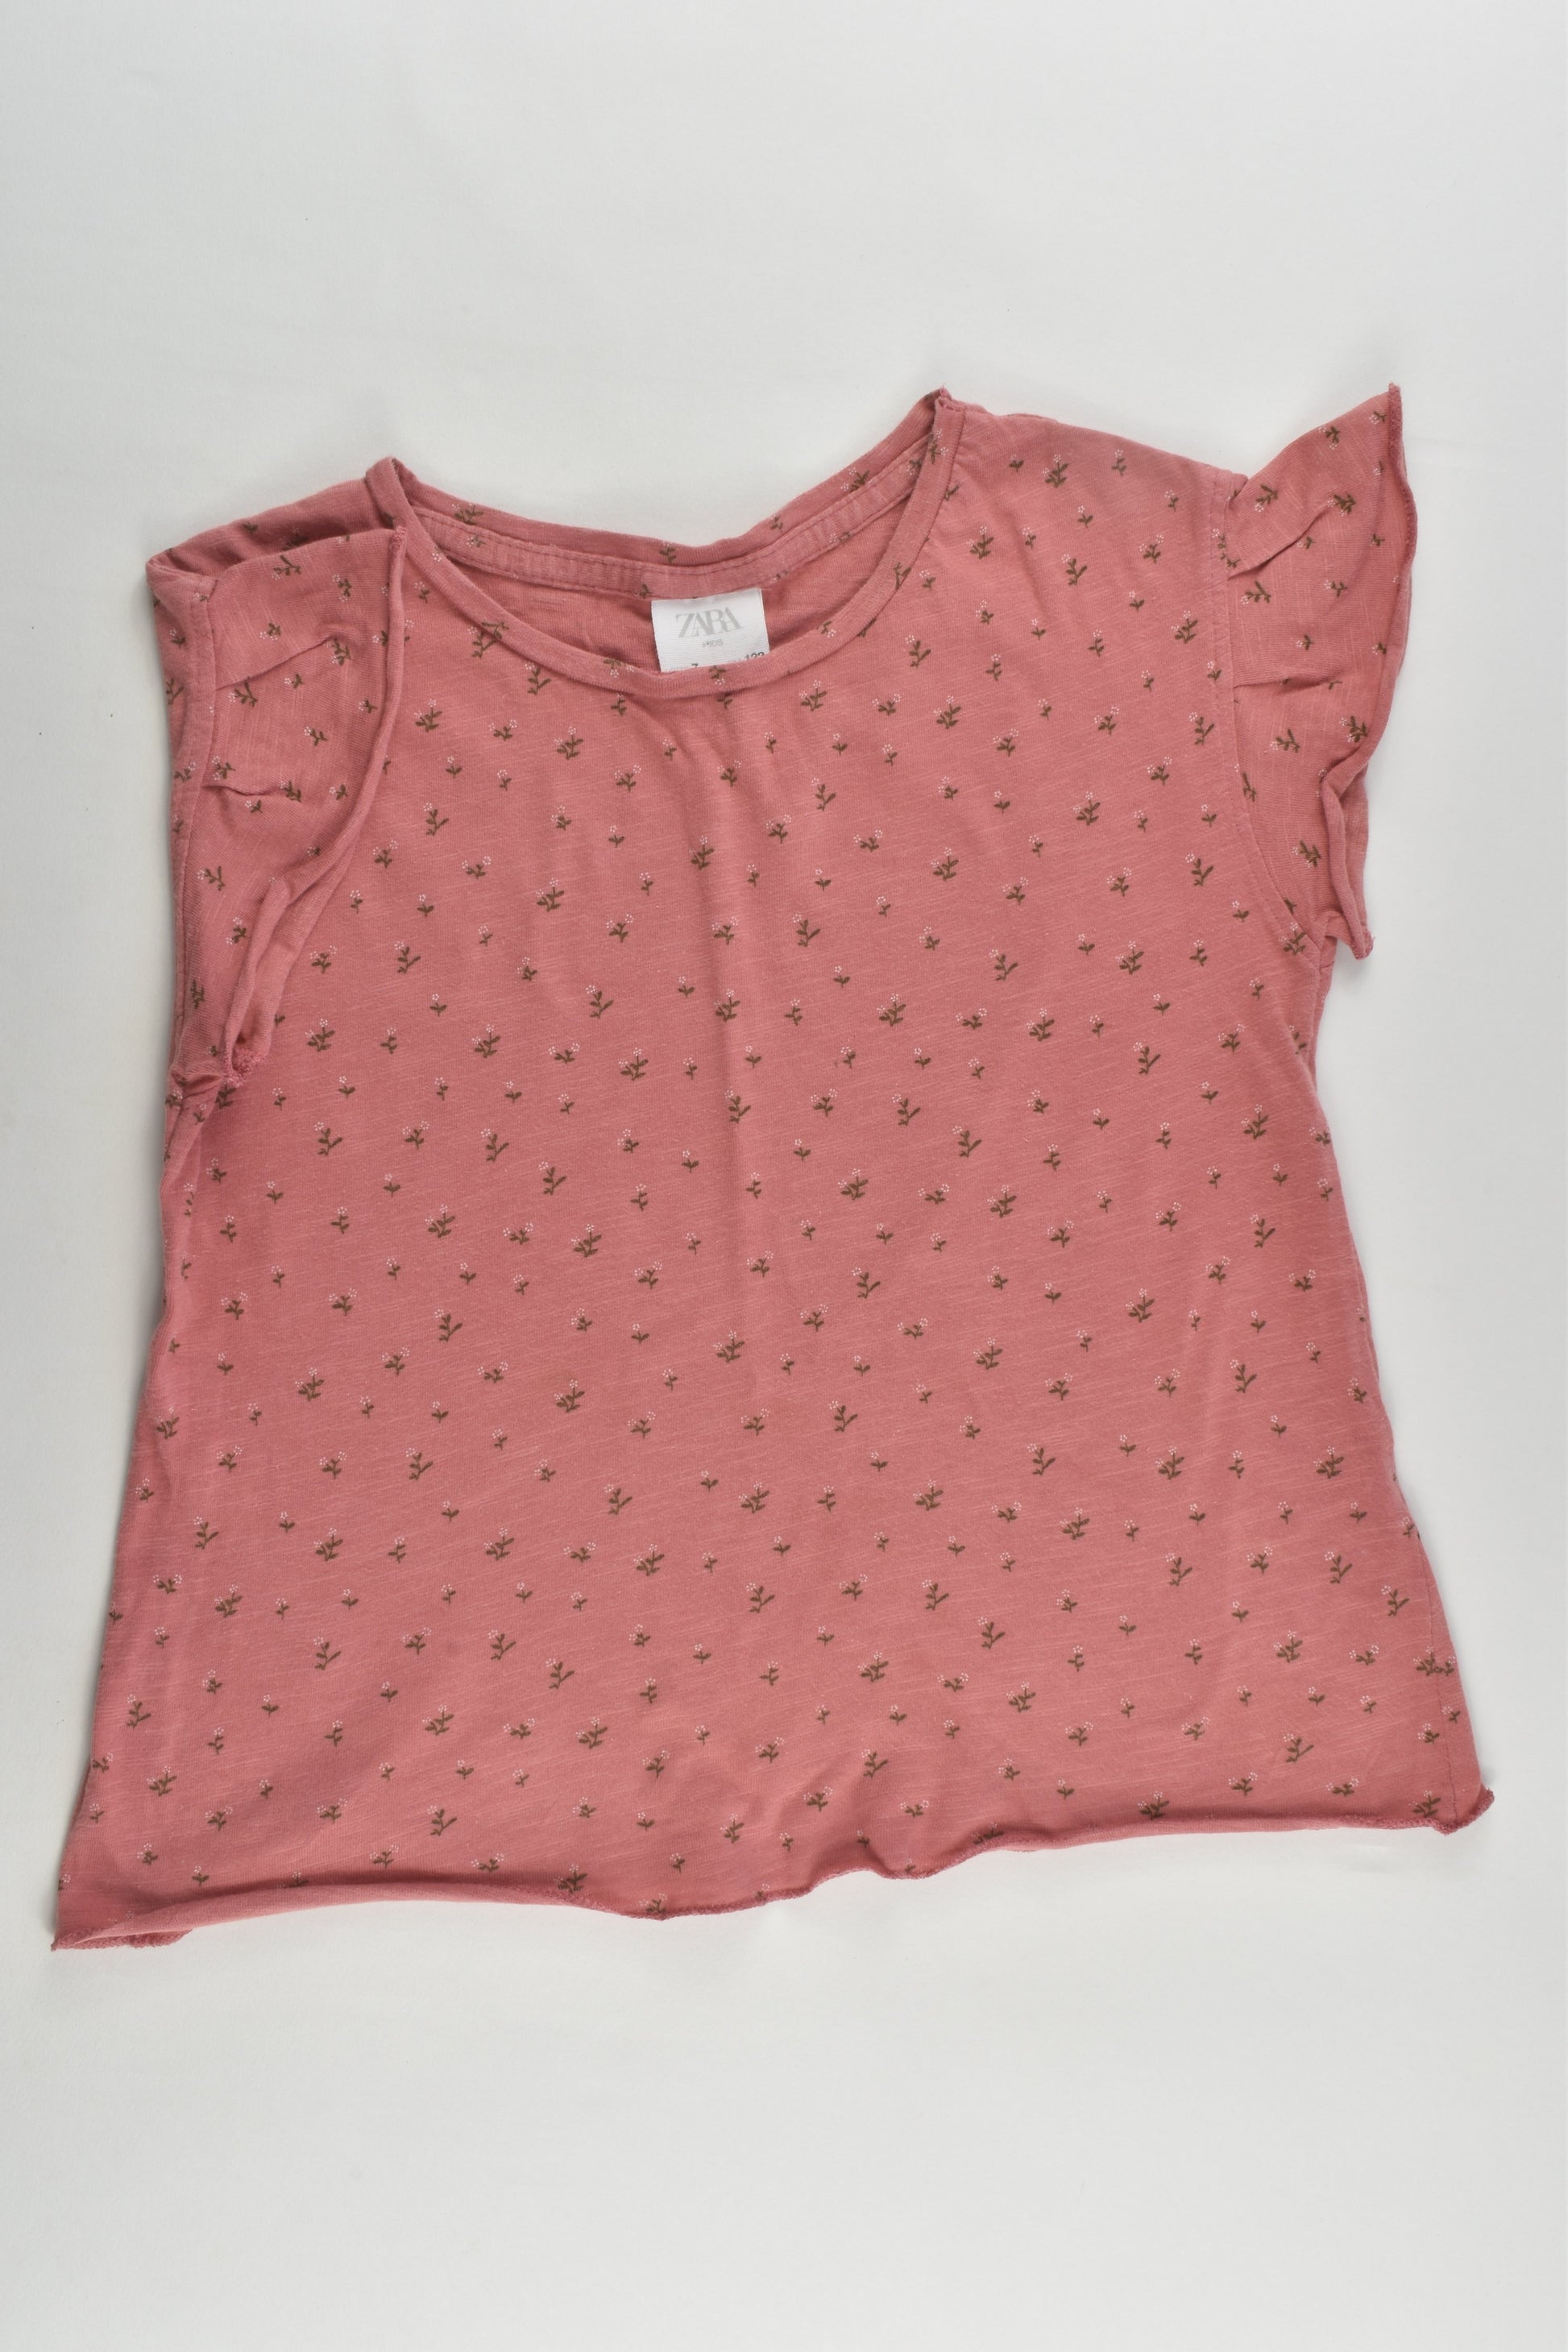 Zara Size 7 (122 cm) Floral T-shirt